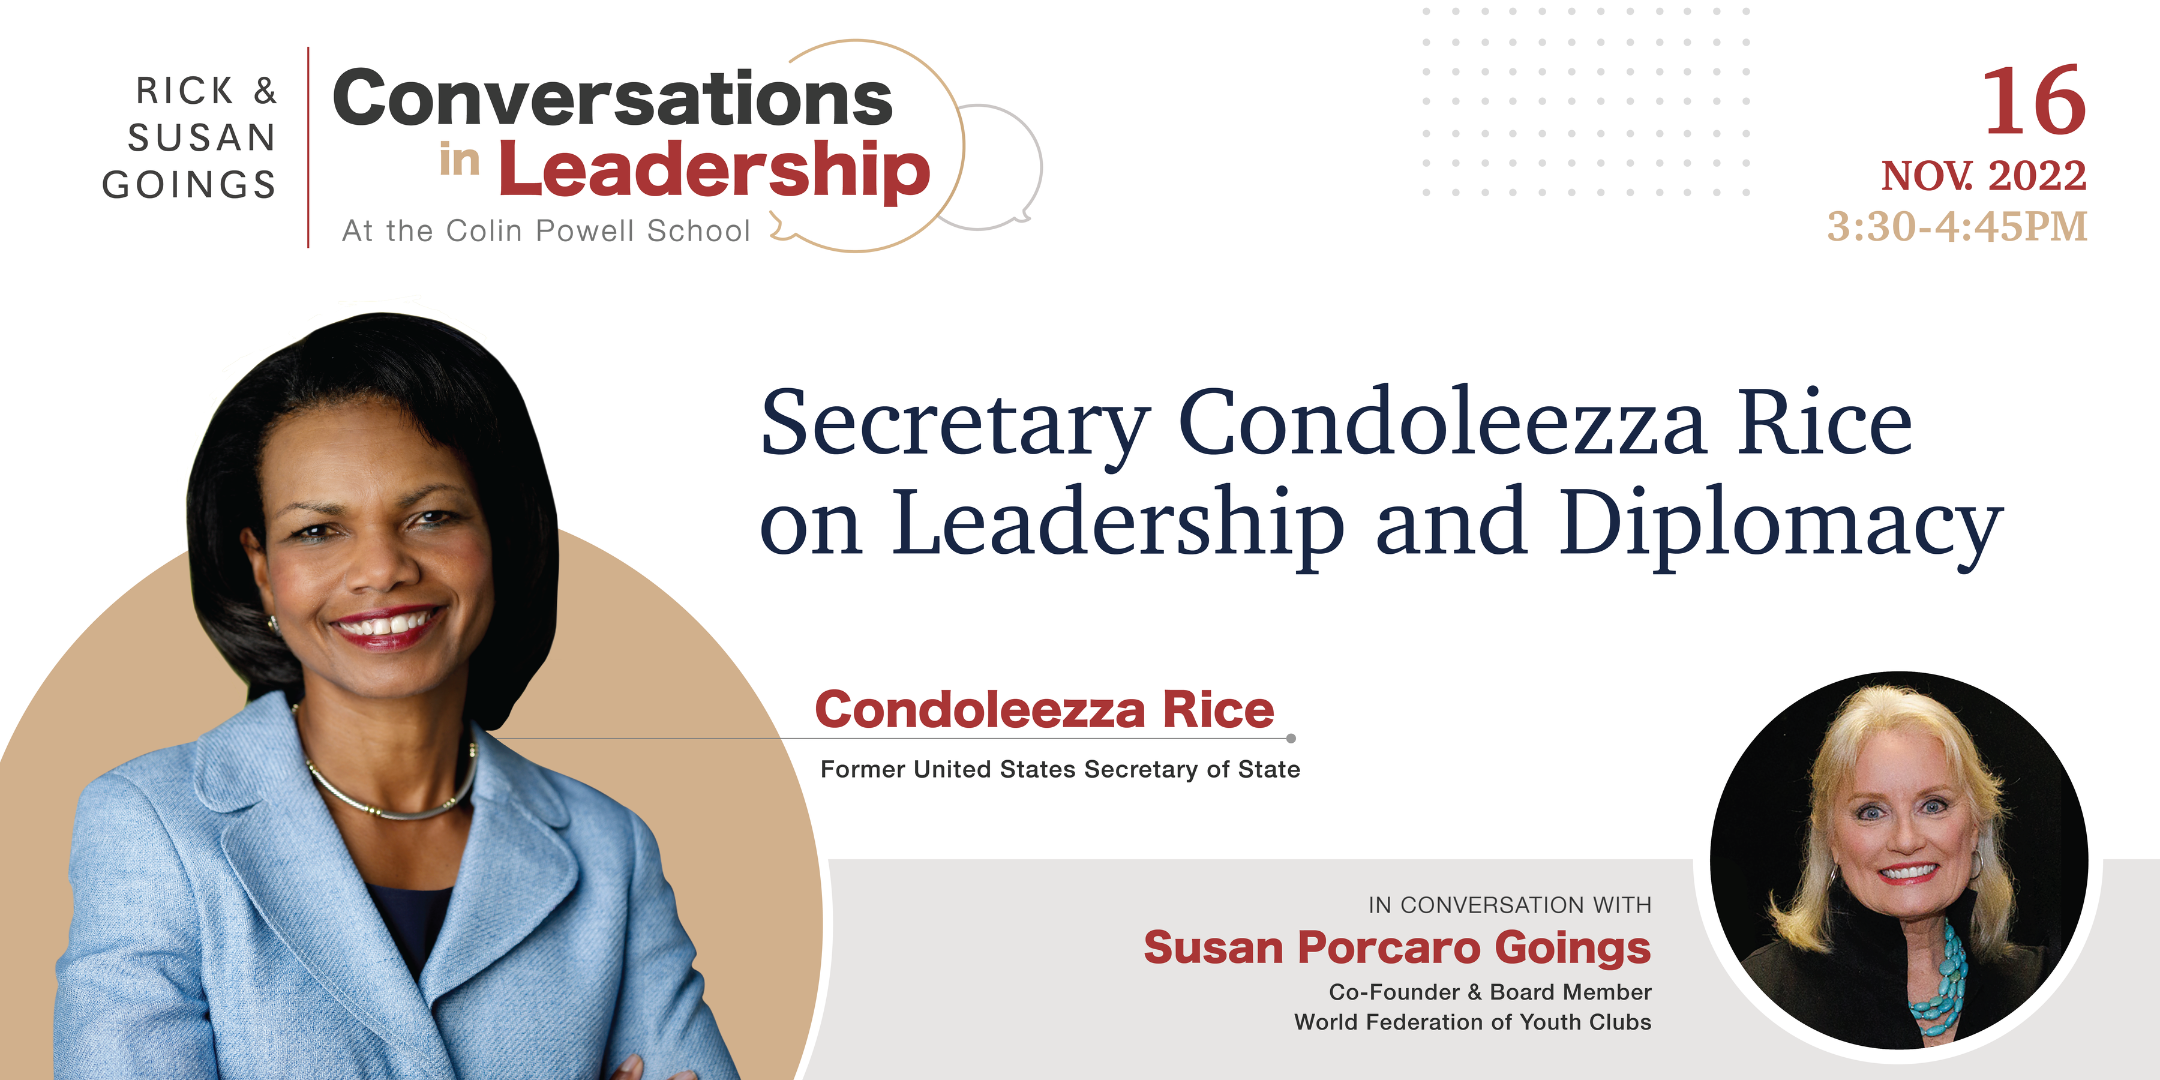 Inaugural Rick & Susan Goings Conversations in Leadership - Condoleezza Rice